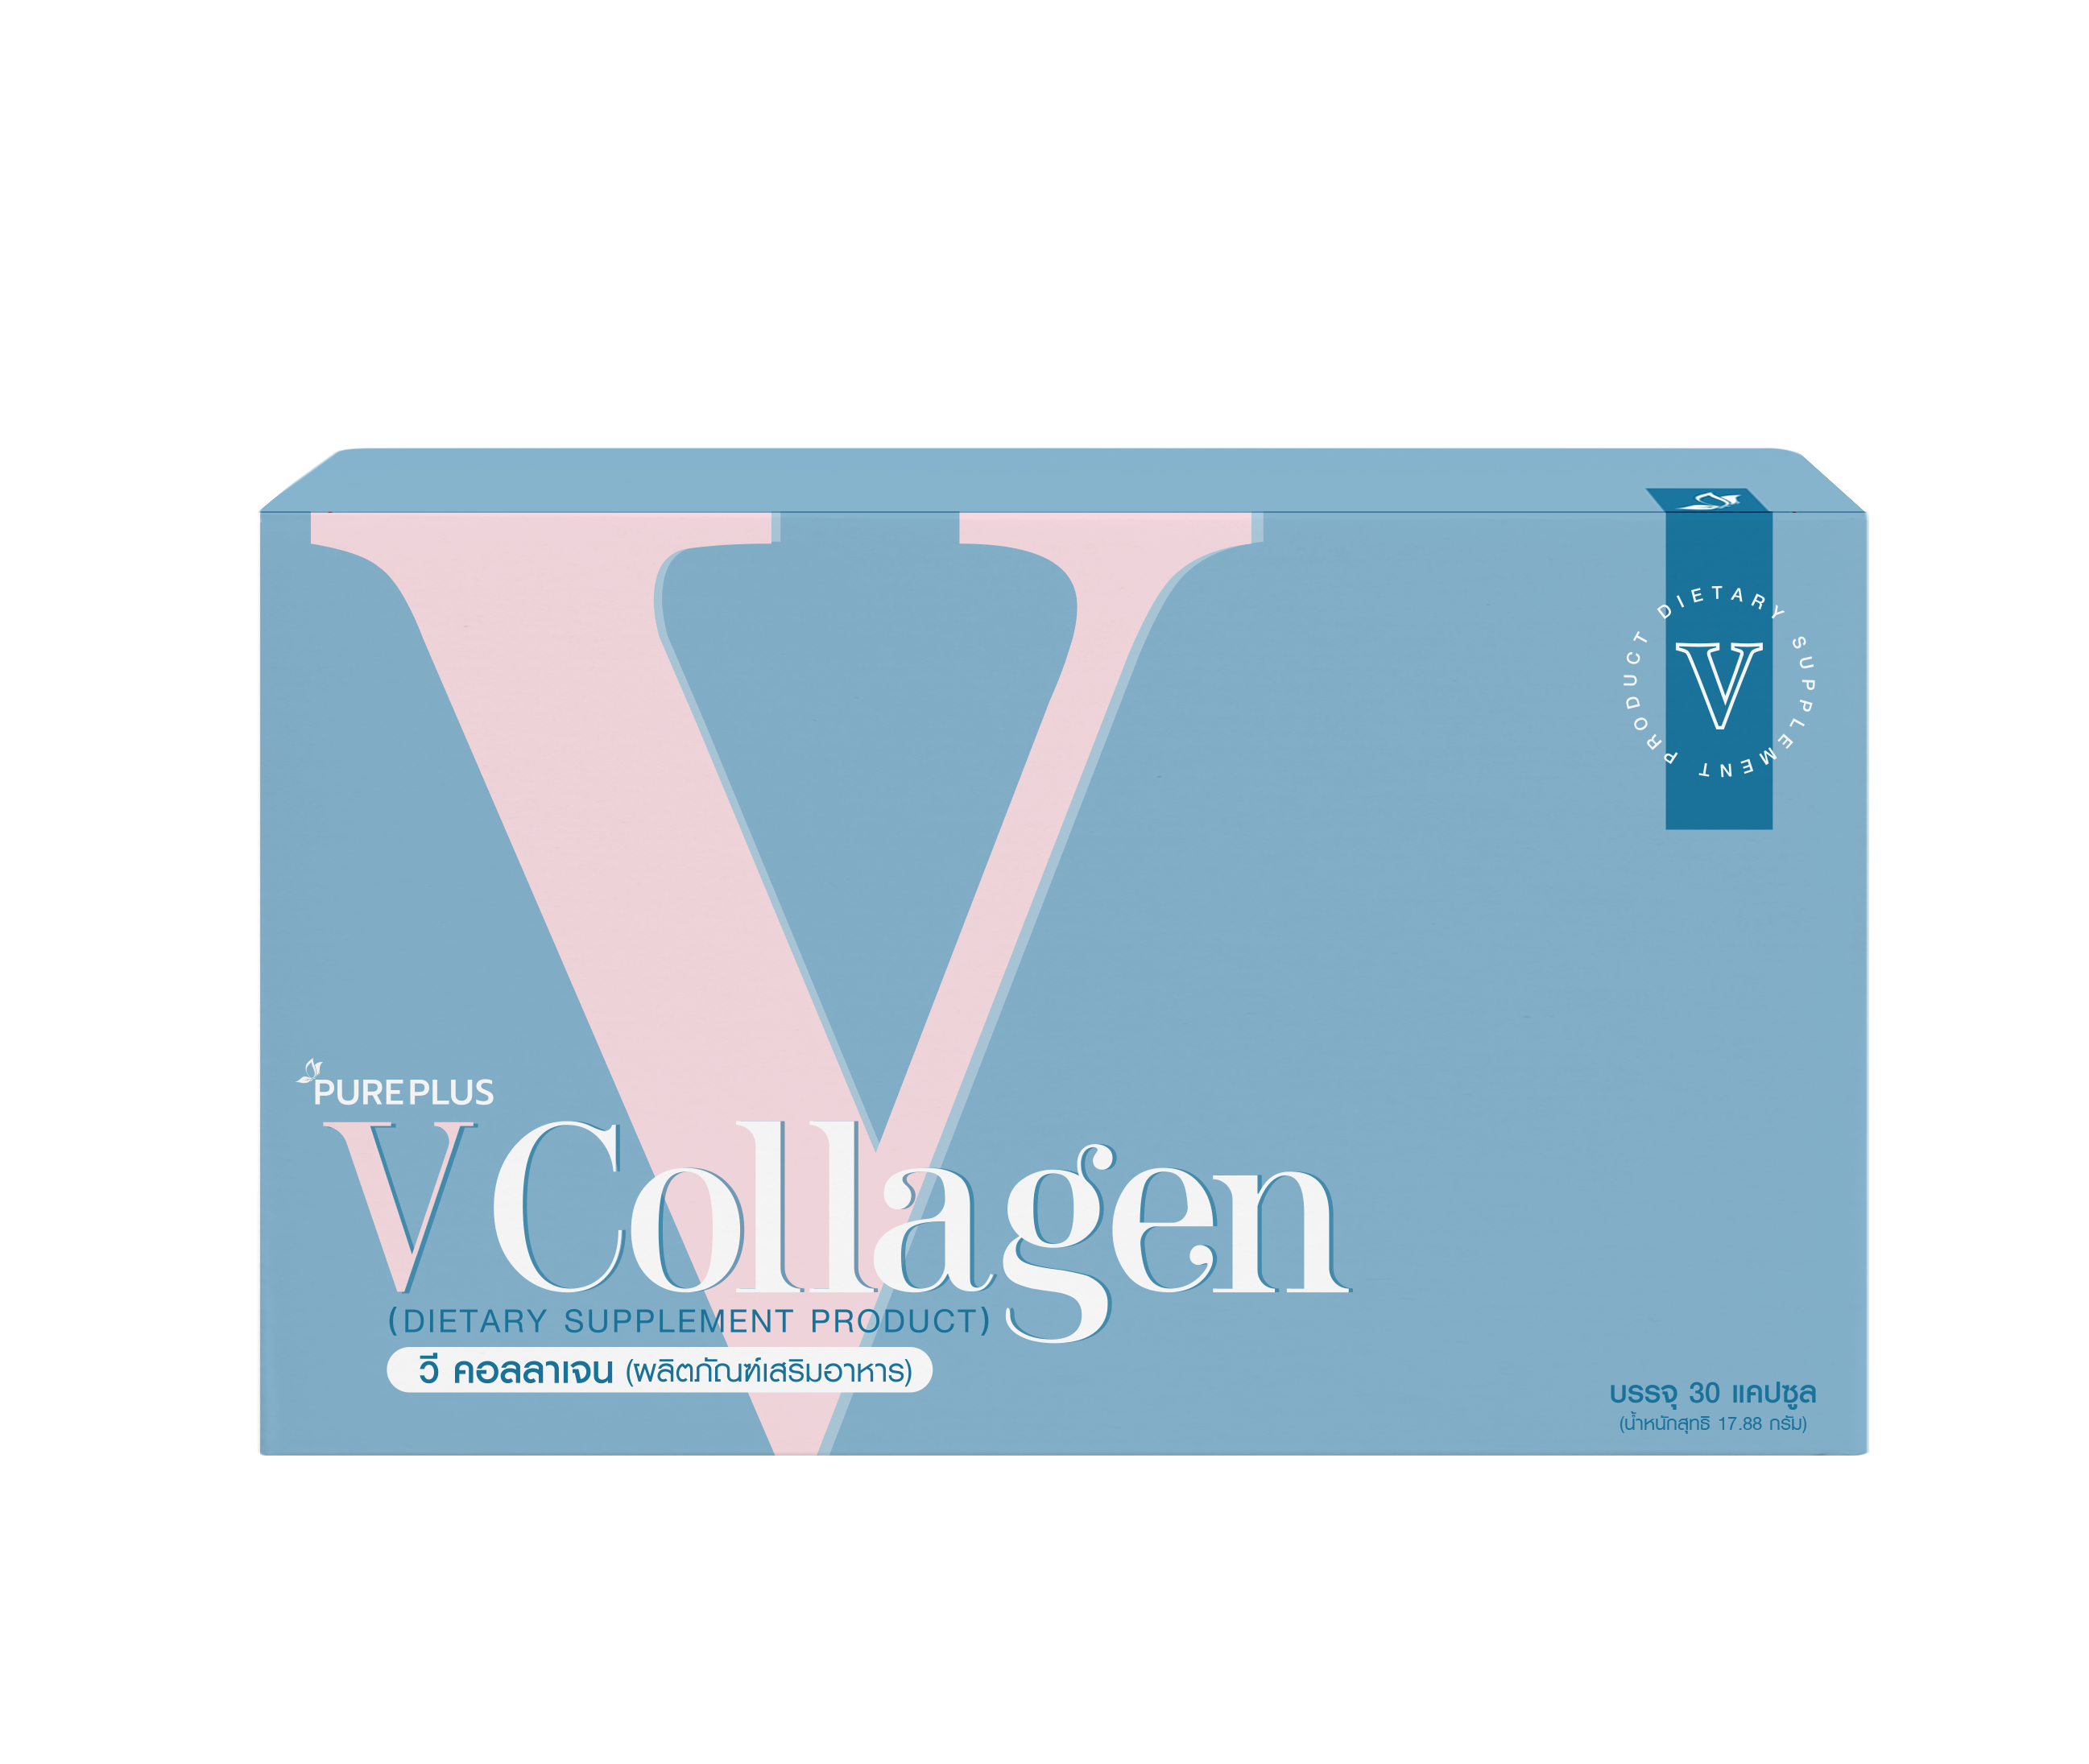 Pureplus V collagen